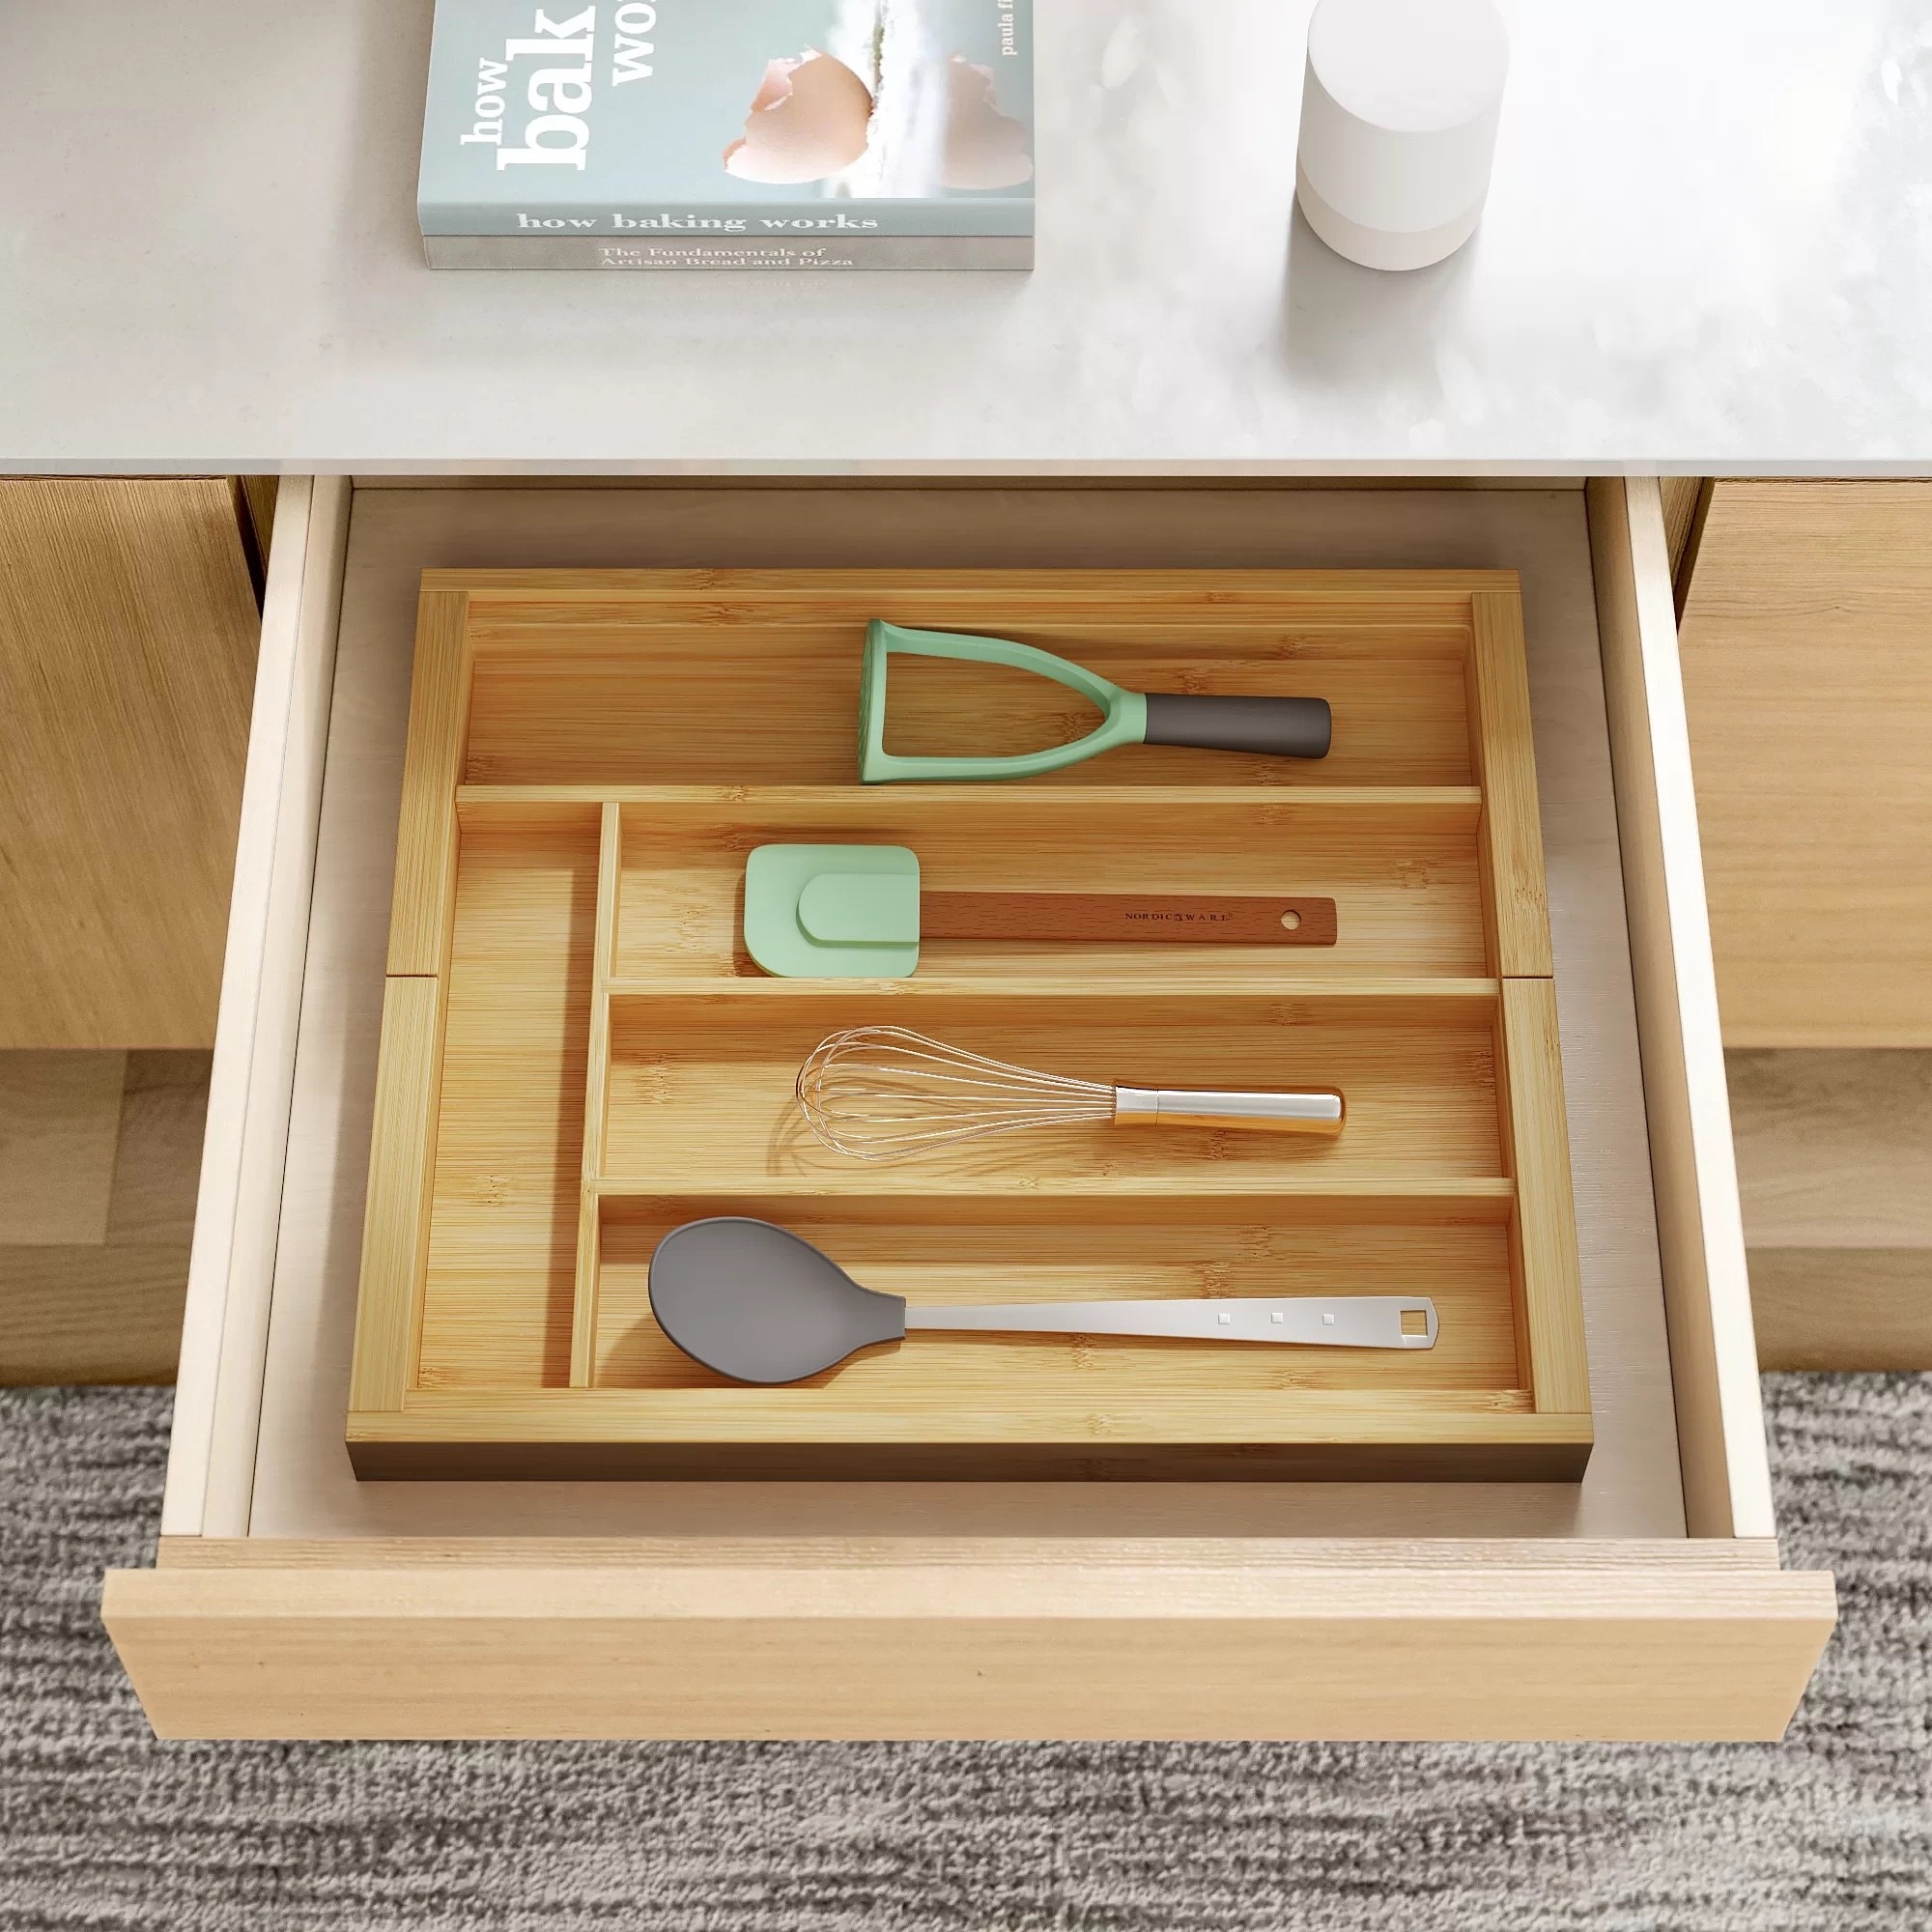 an wooden adjustable flatware and utensil organizer in a kitchen drawer holding utensils